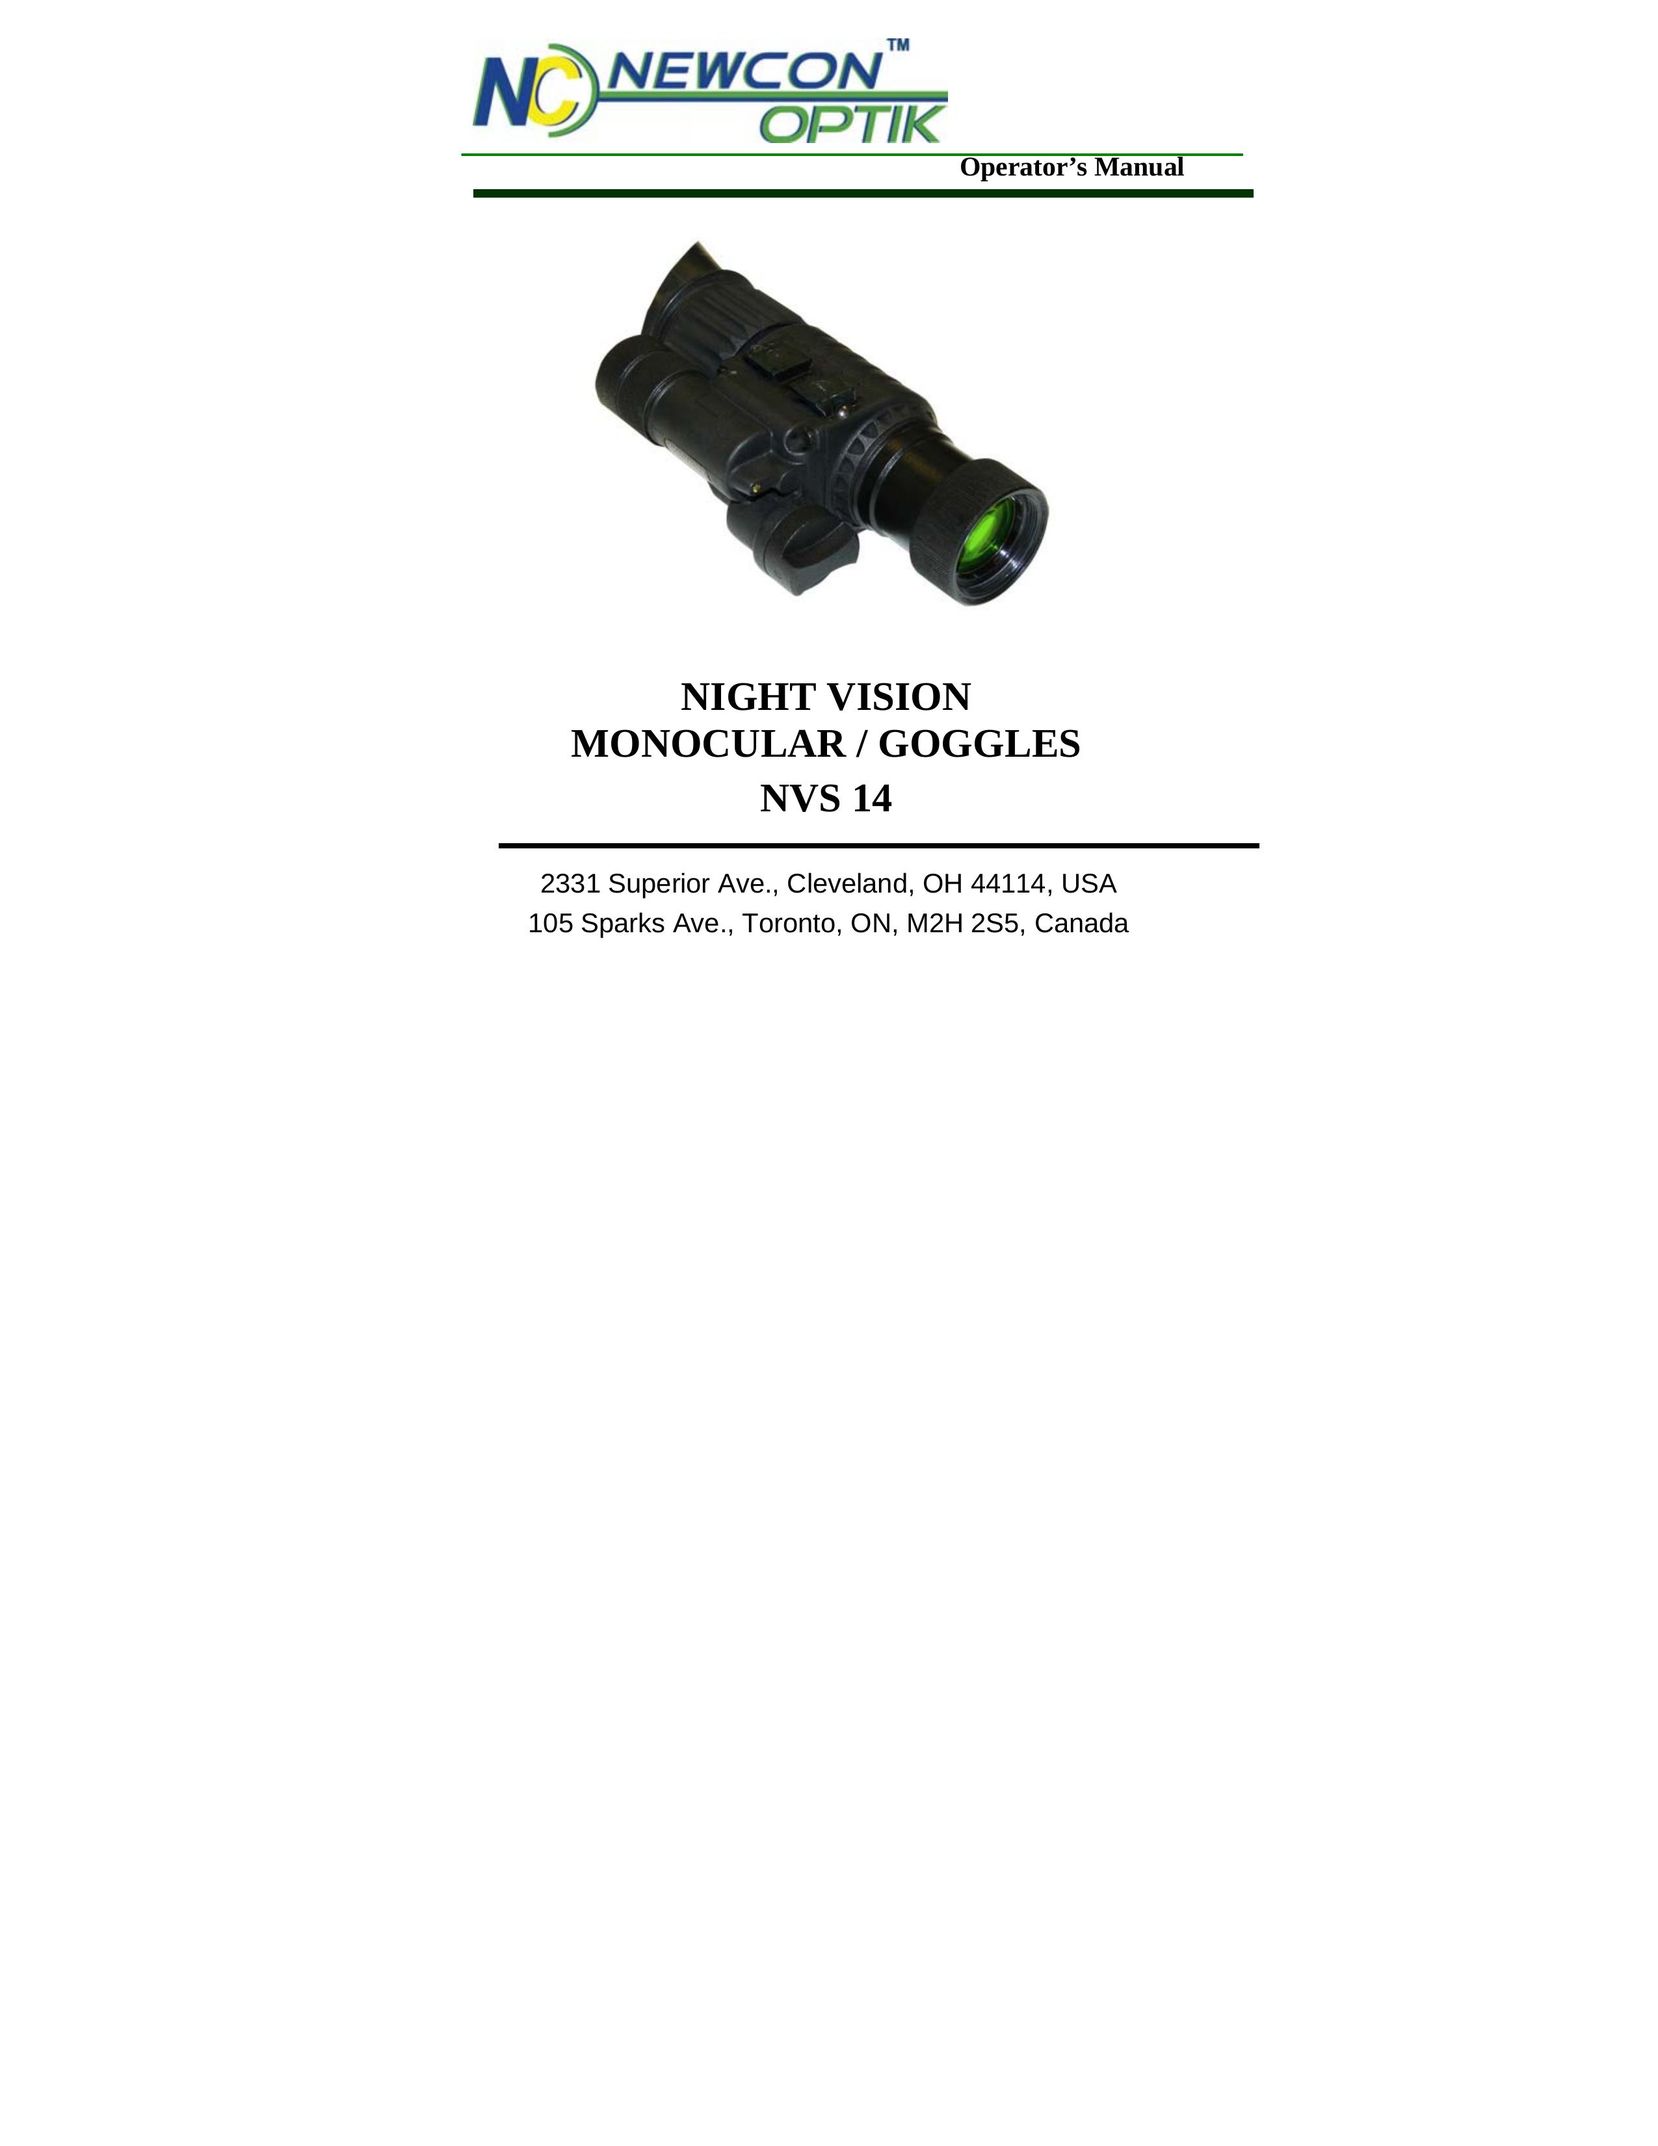 Newcon Optik Night Vision Monocular/Goggles Binoculars User Manual